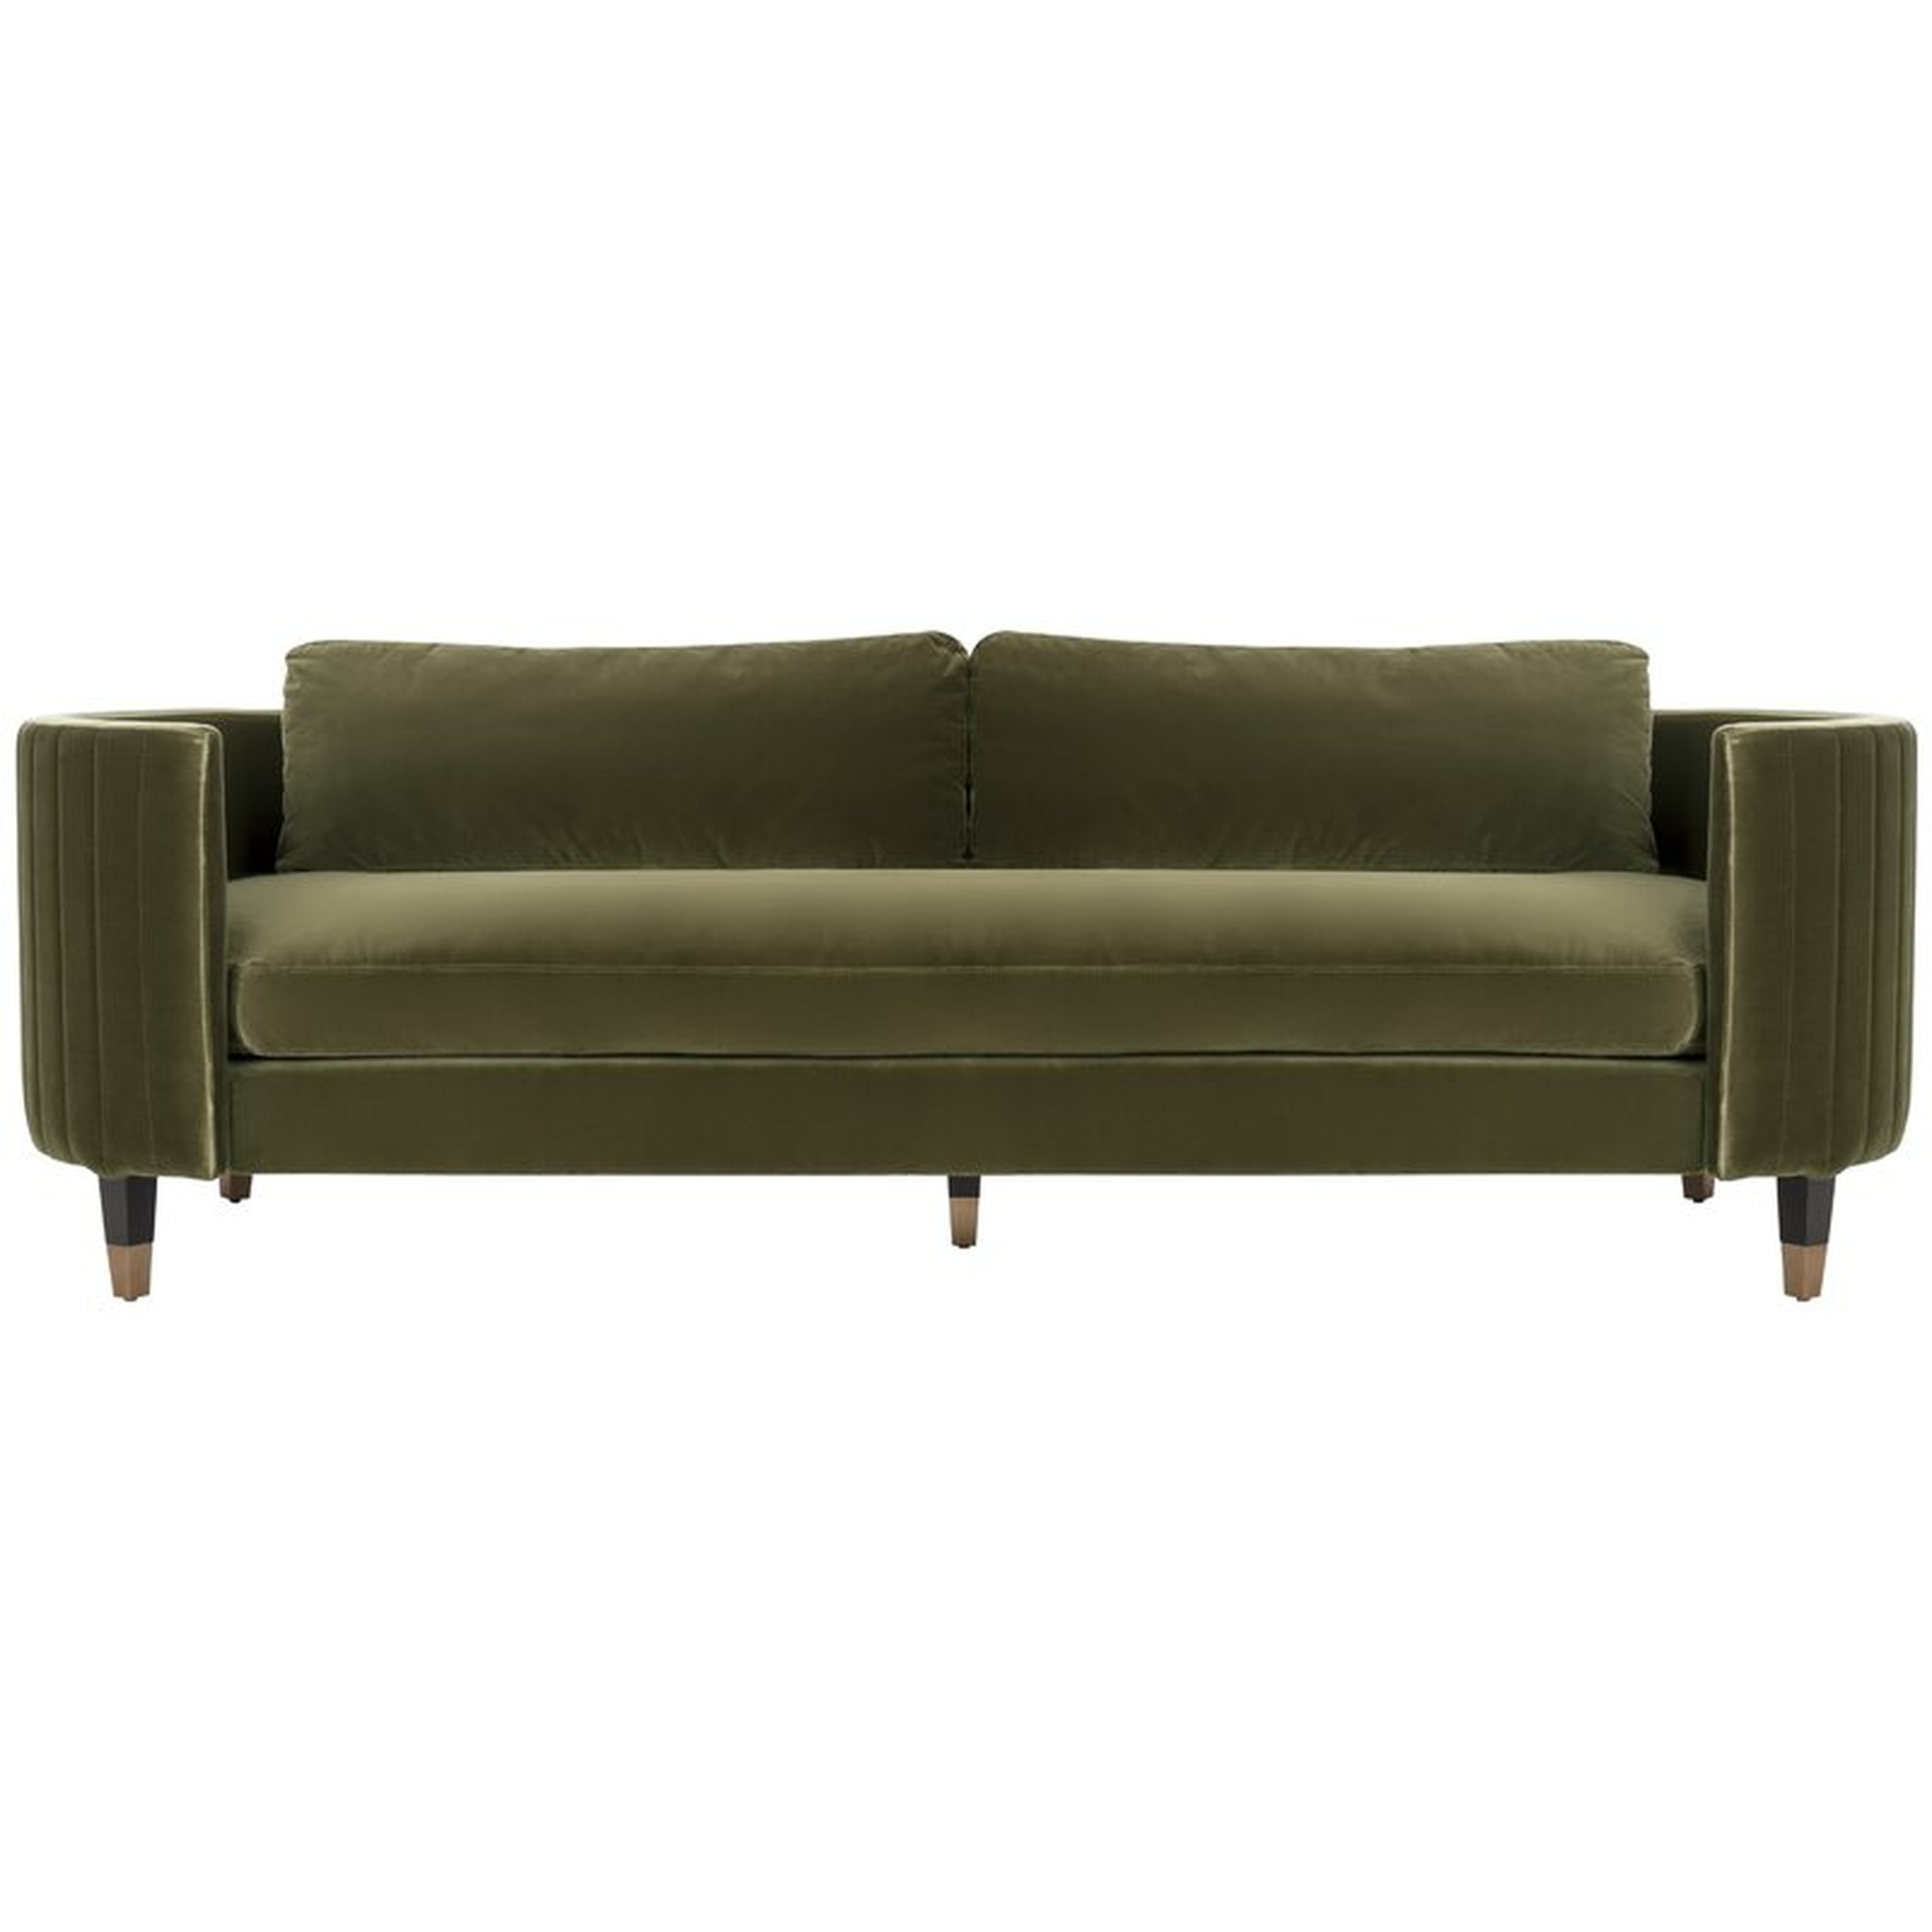 Safavieh Couture Winford Velvet Sofa Upholstery Color: Dark Olive Green. In Stock 9/8 - Perigold